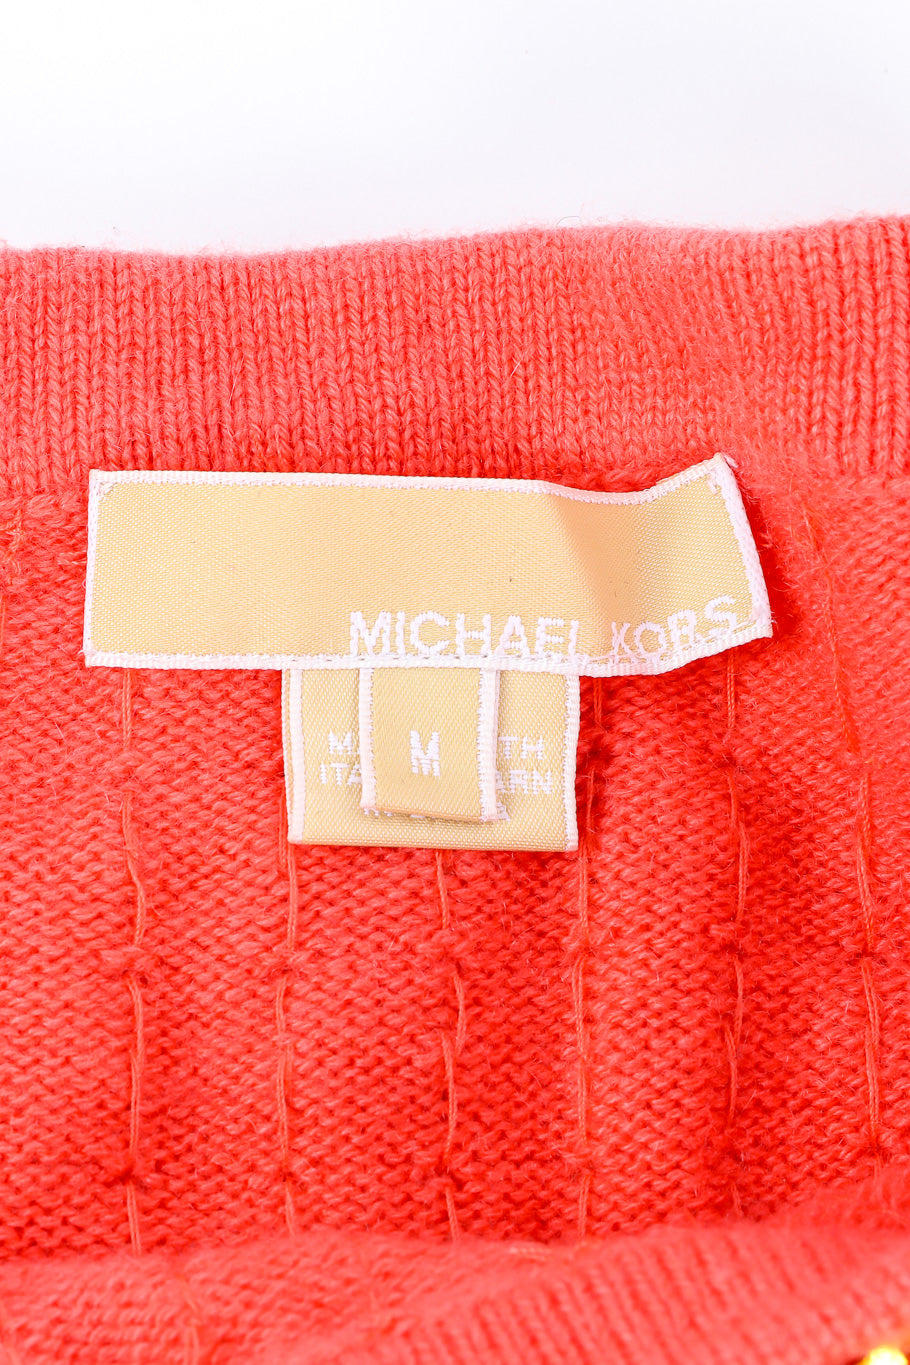 Cashmere sequin sweater dress by Michael Kors label @recessla